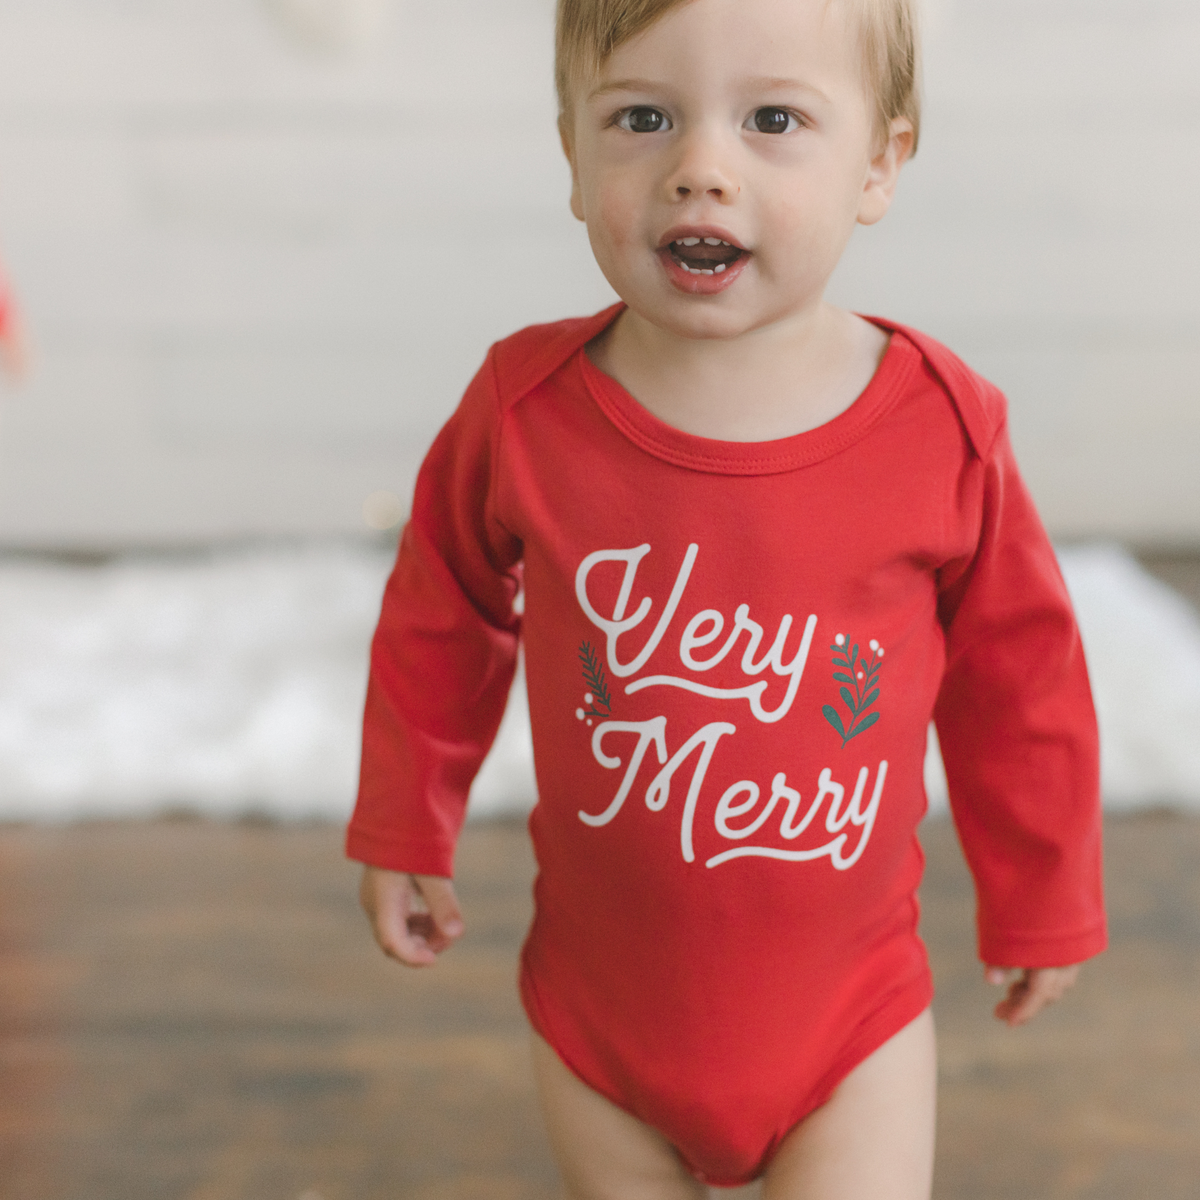 Very Merry Christmas Baby Bodysuit